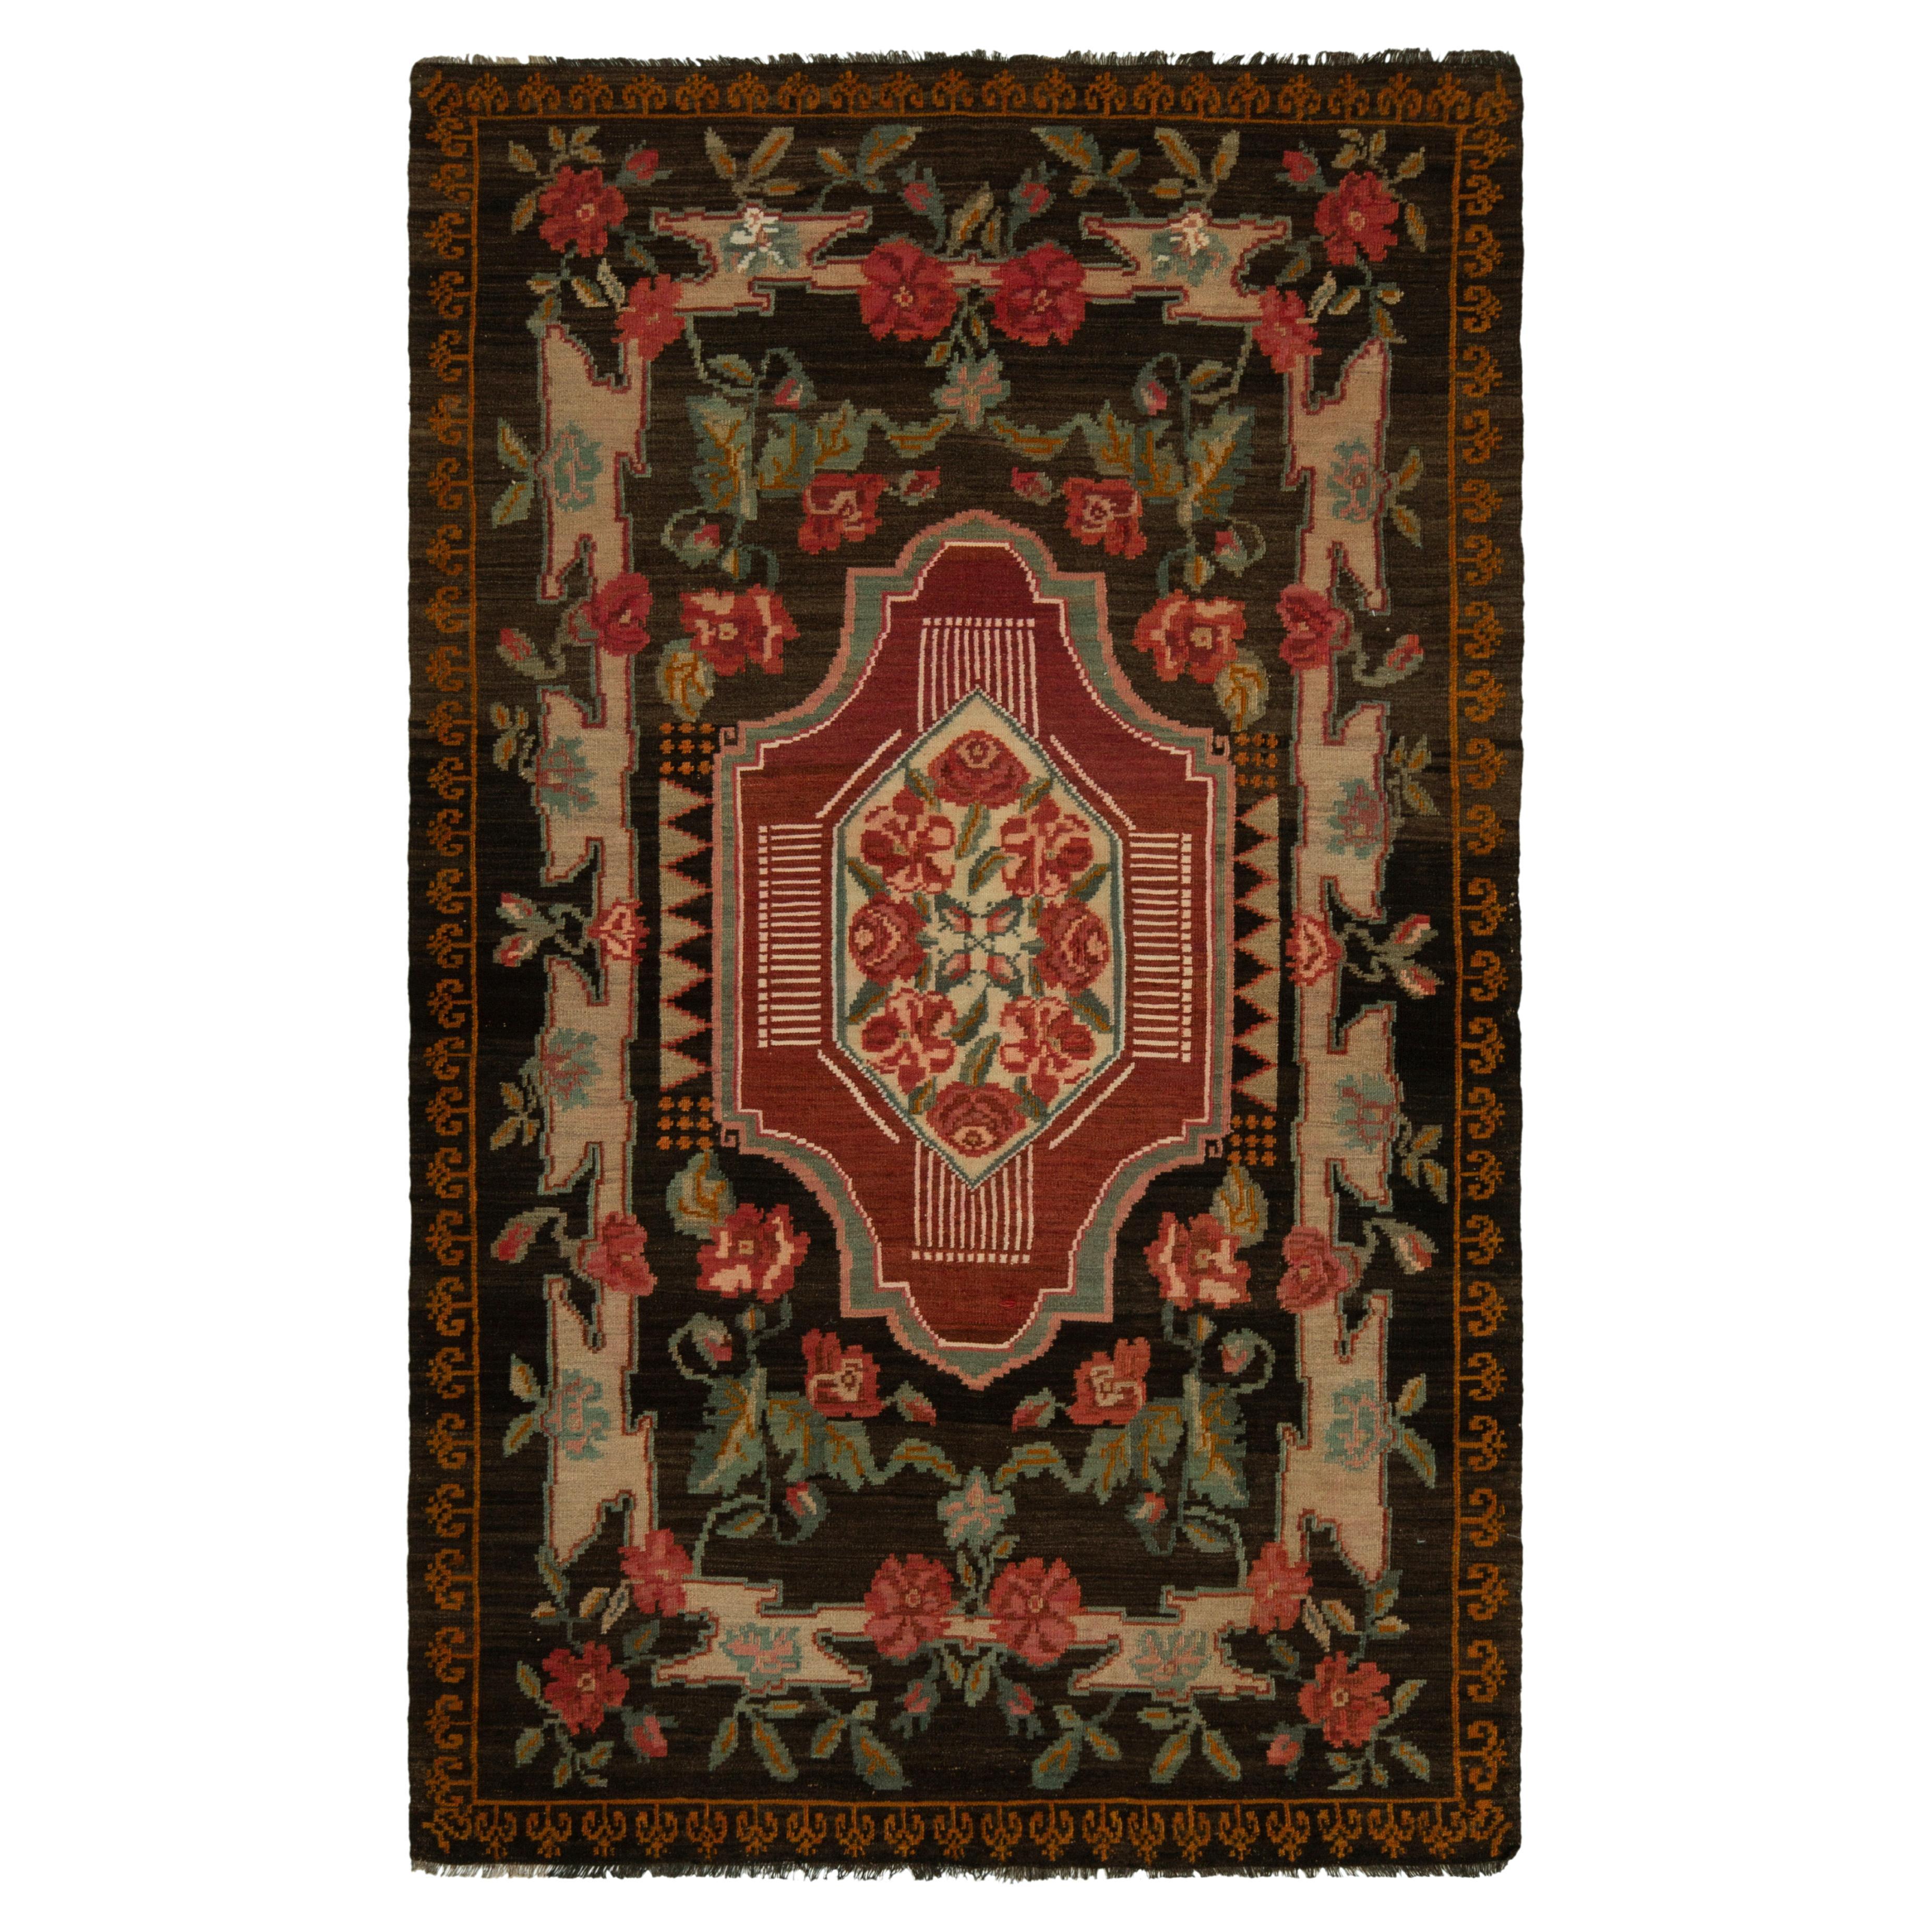 Vintage Bessarabian Kilim Rug in Red, Brown, Green Floral Pattern by Rug & Kilim For Sale